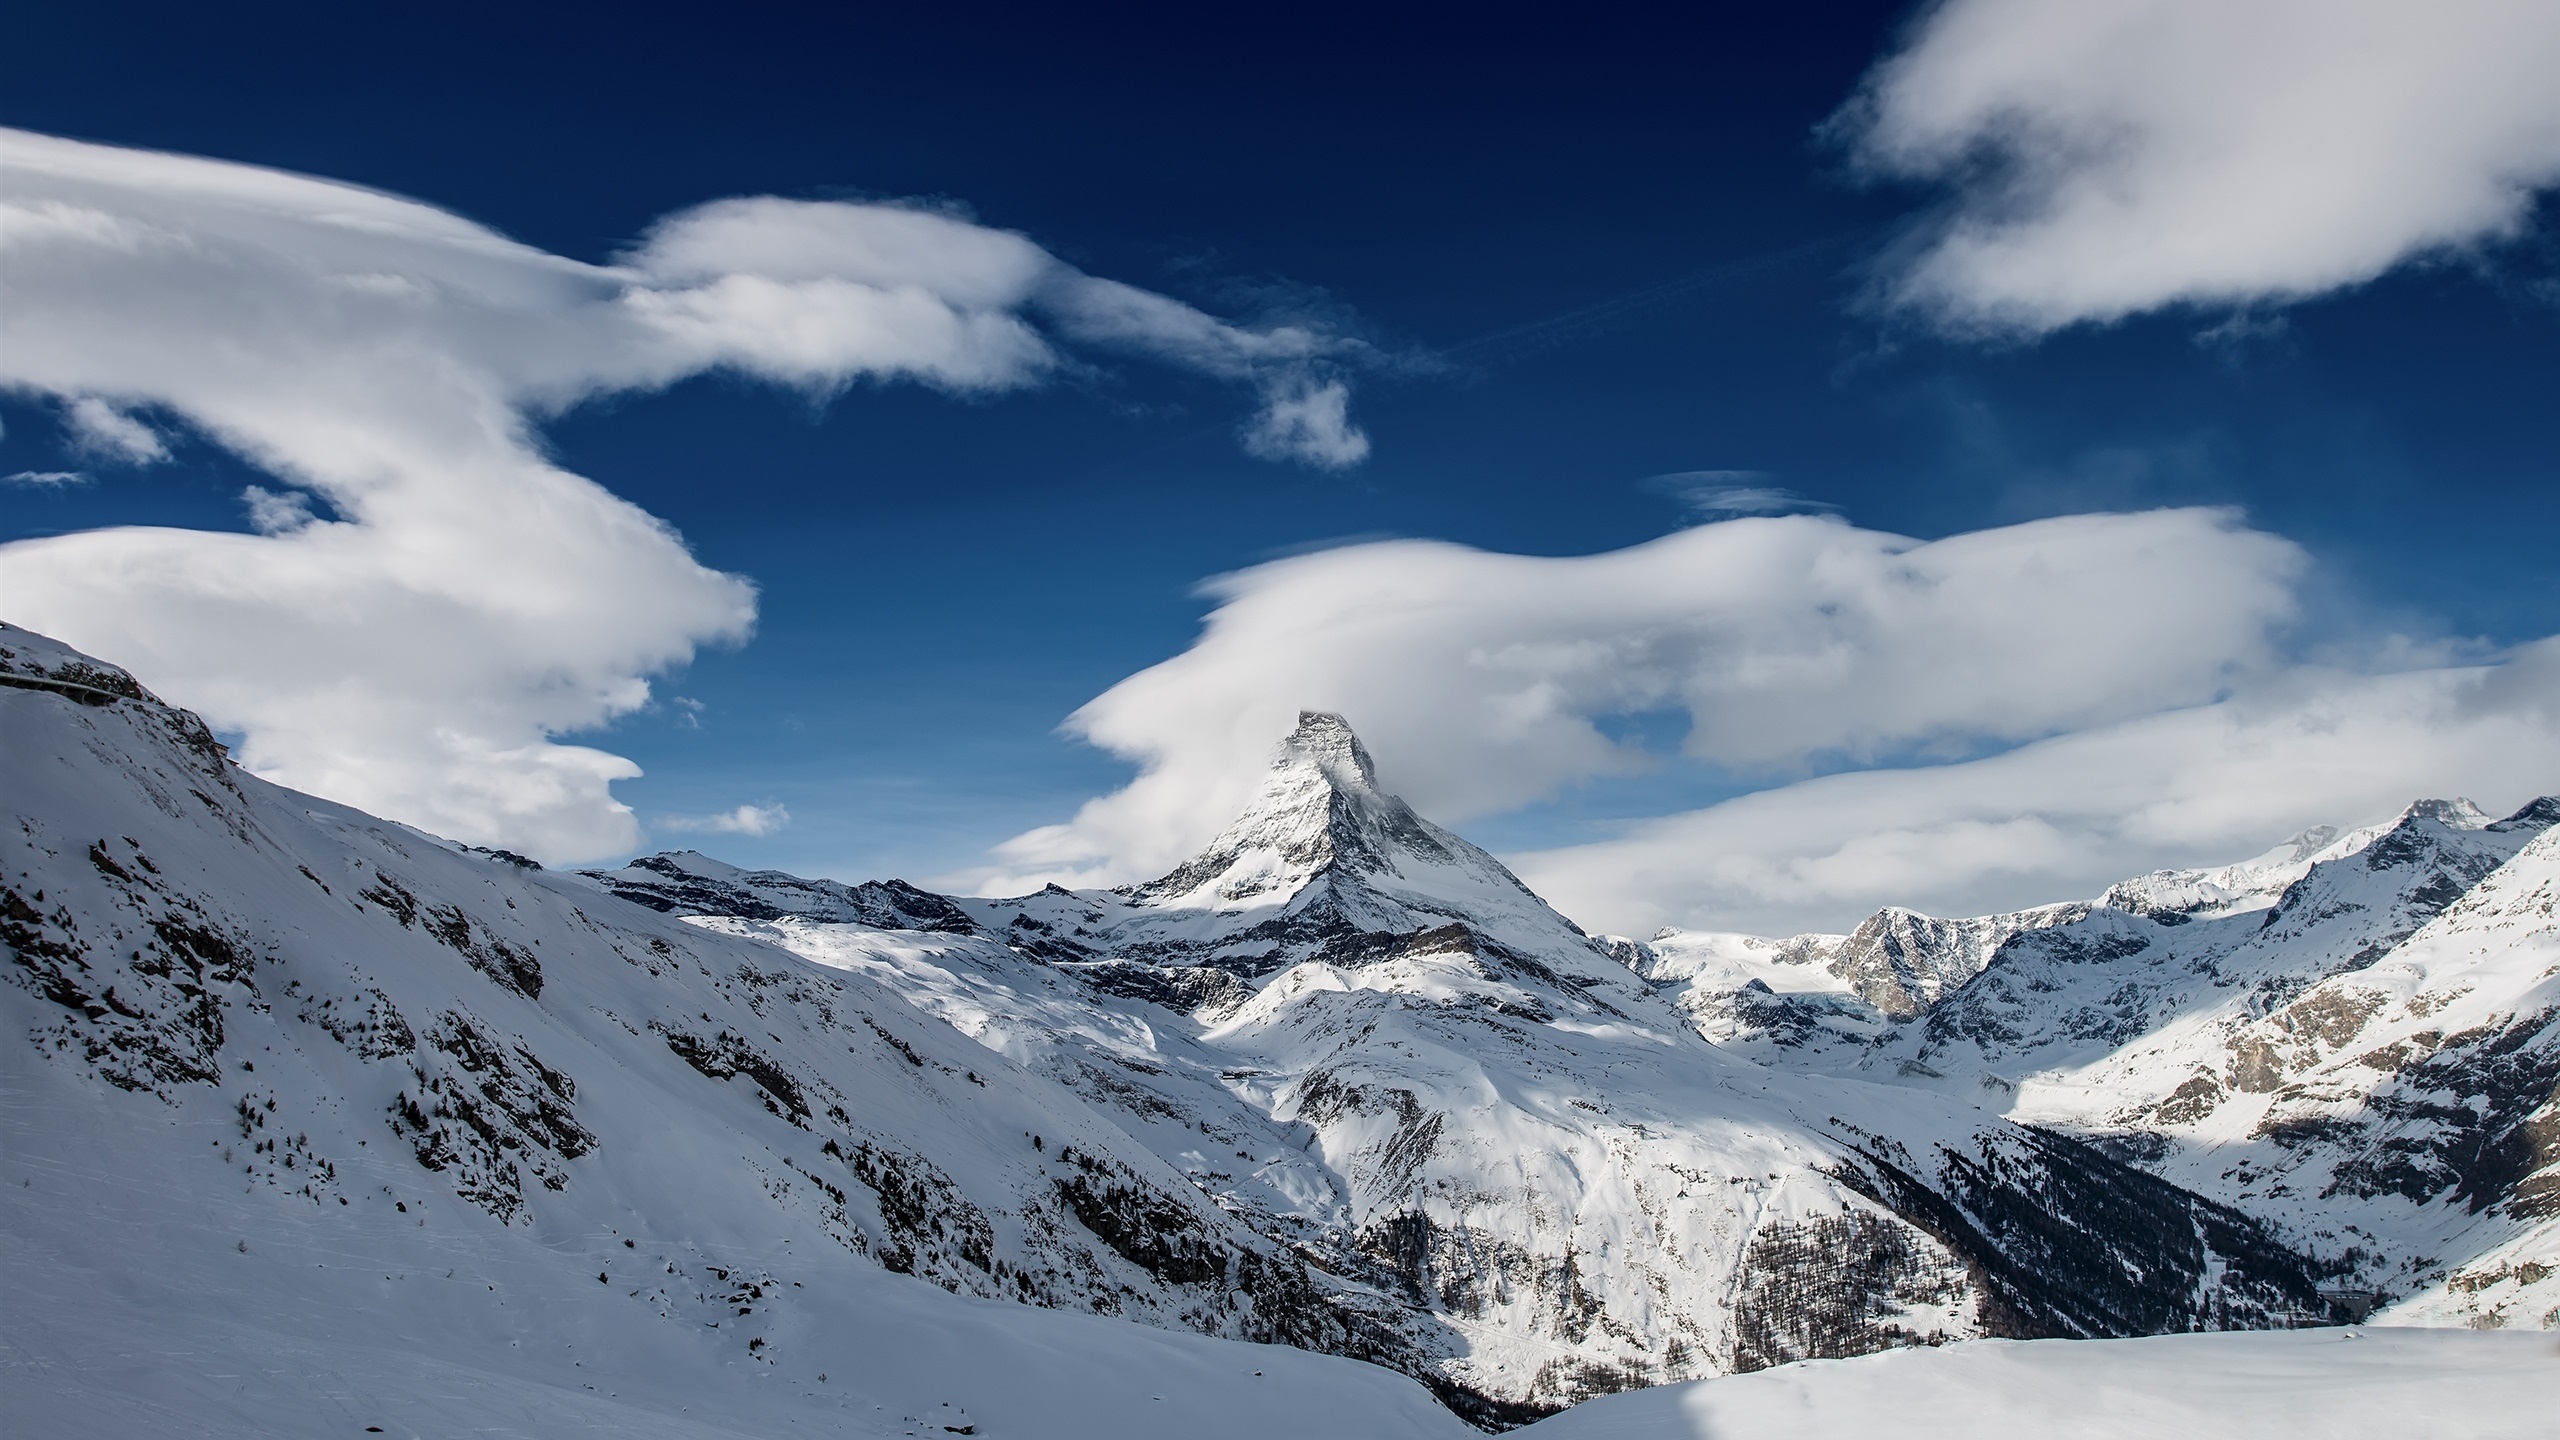 General 2560x1440 Switzerland mountains winter snow sky clouds nature landscape